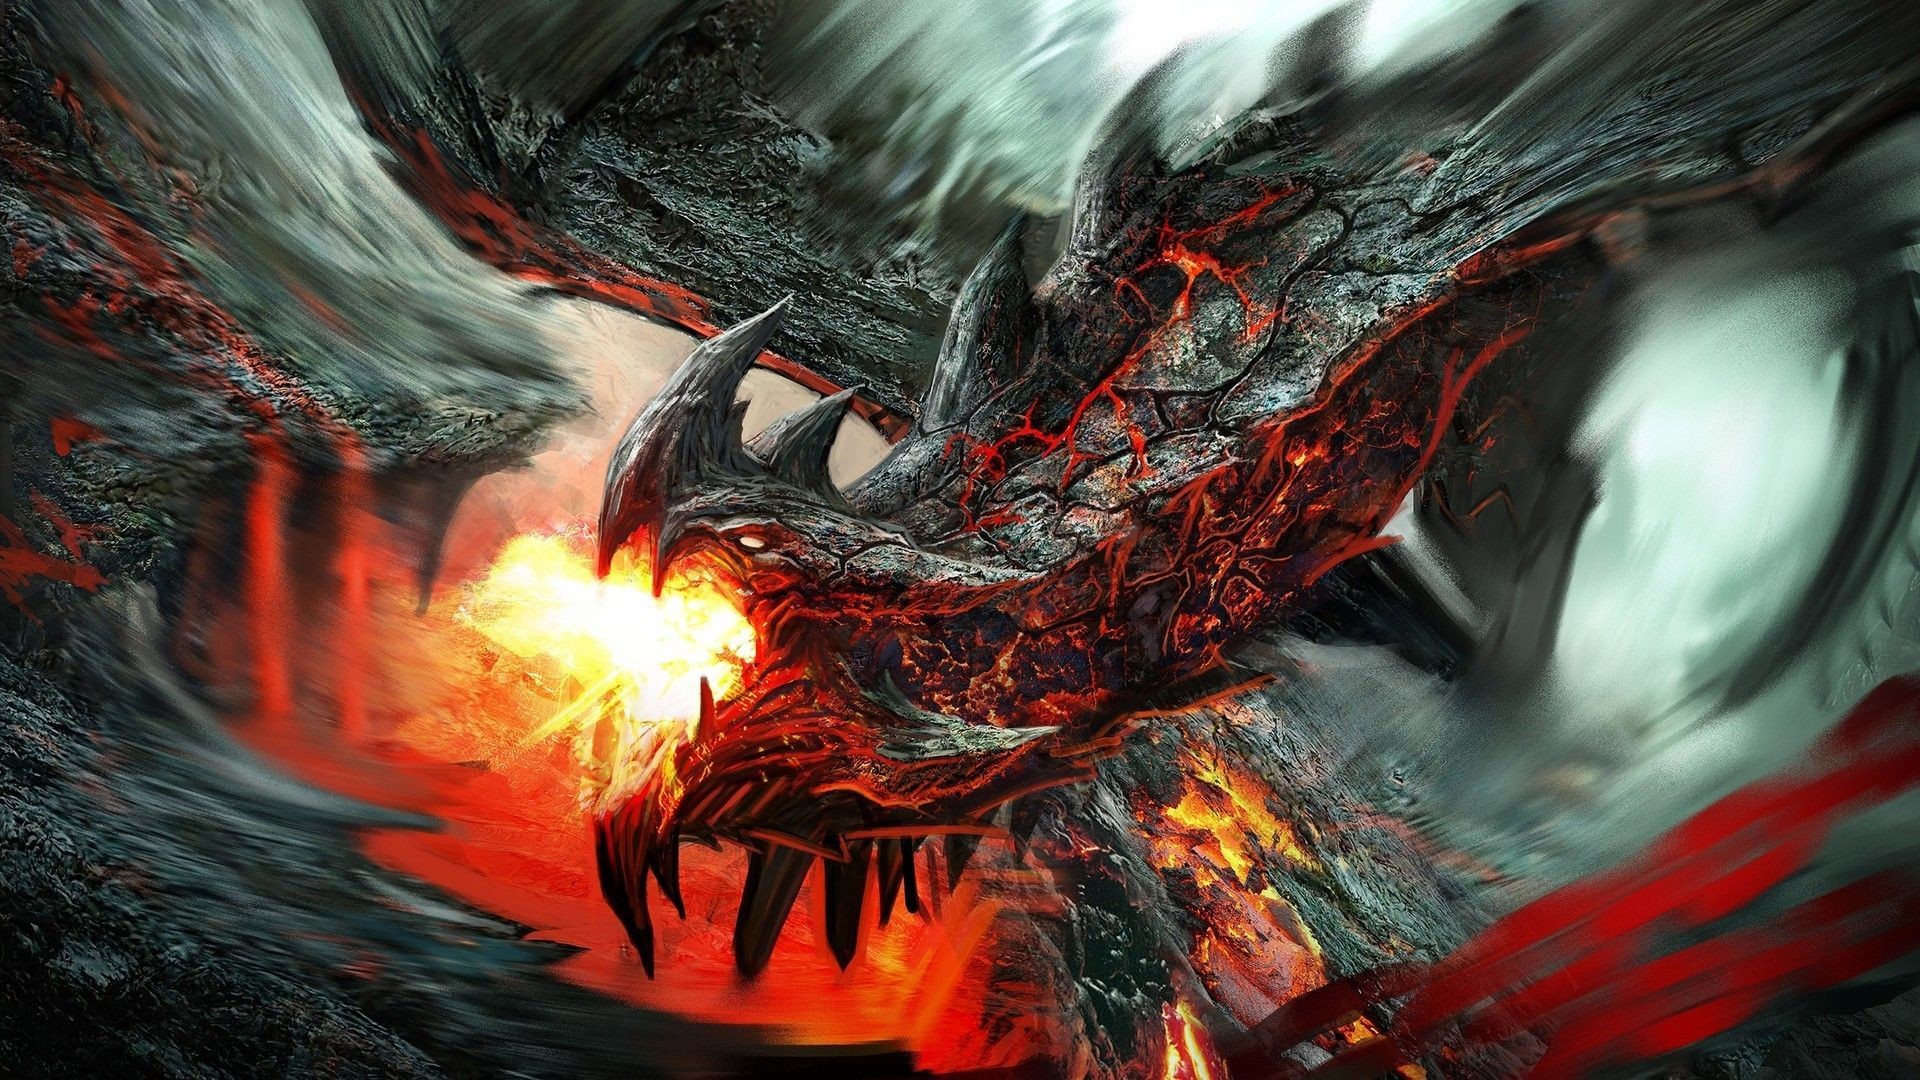 dragon wallpaper hd download,dragon,geological phenomenon,demon,cg artwork,fictional character